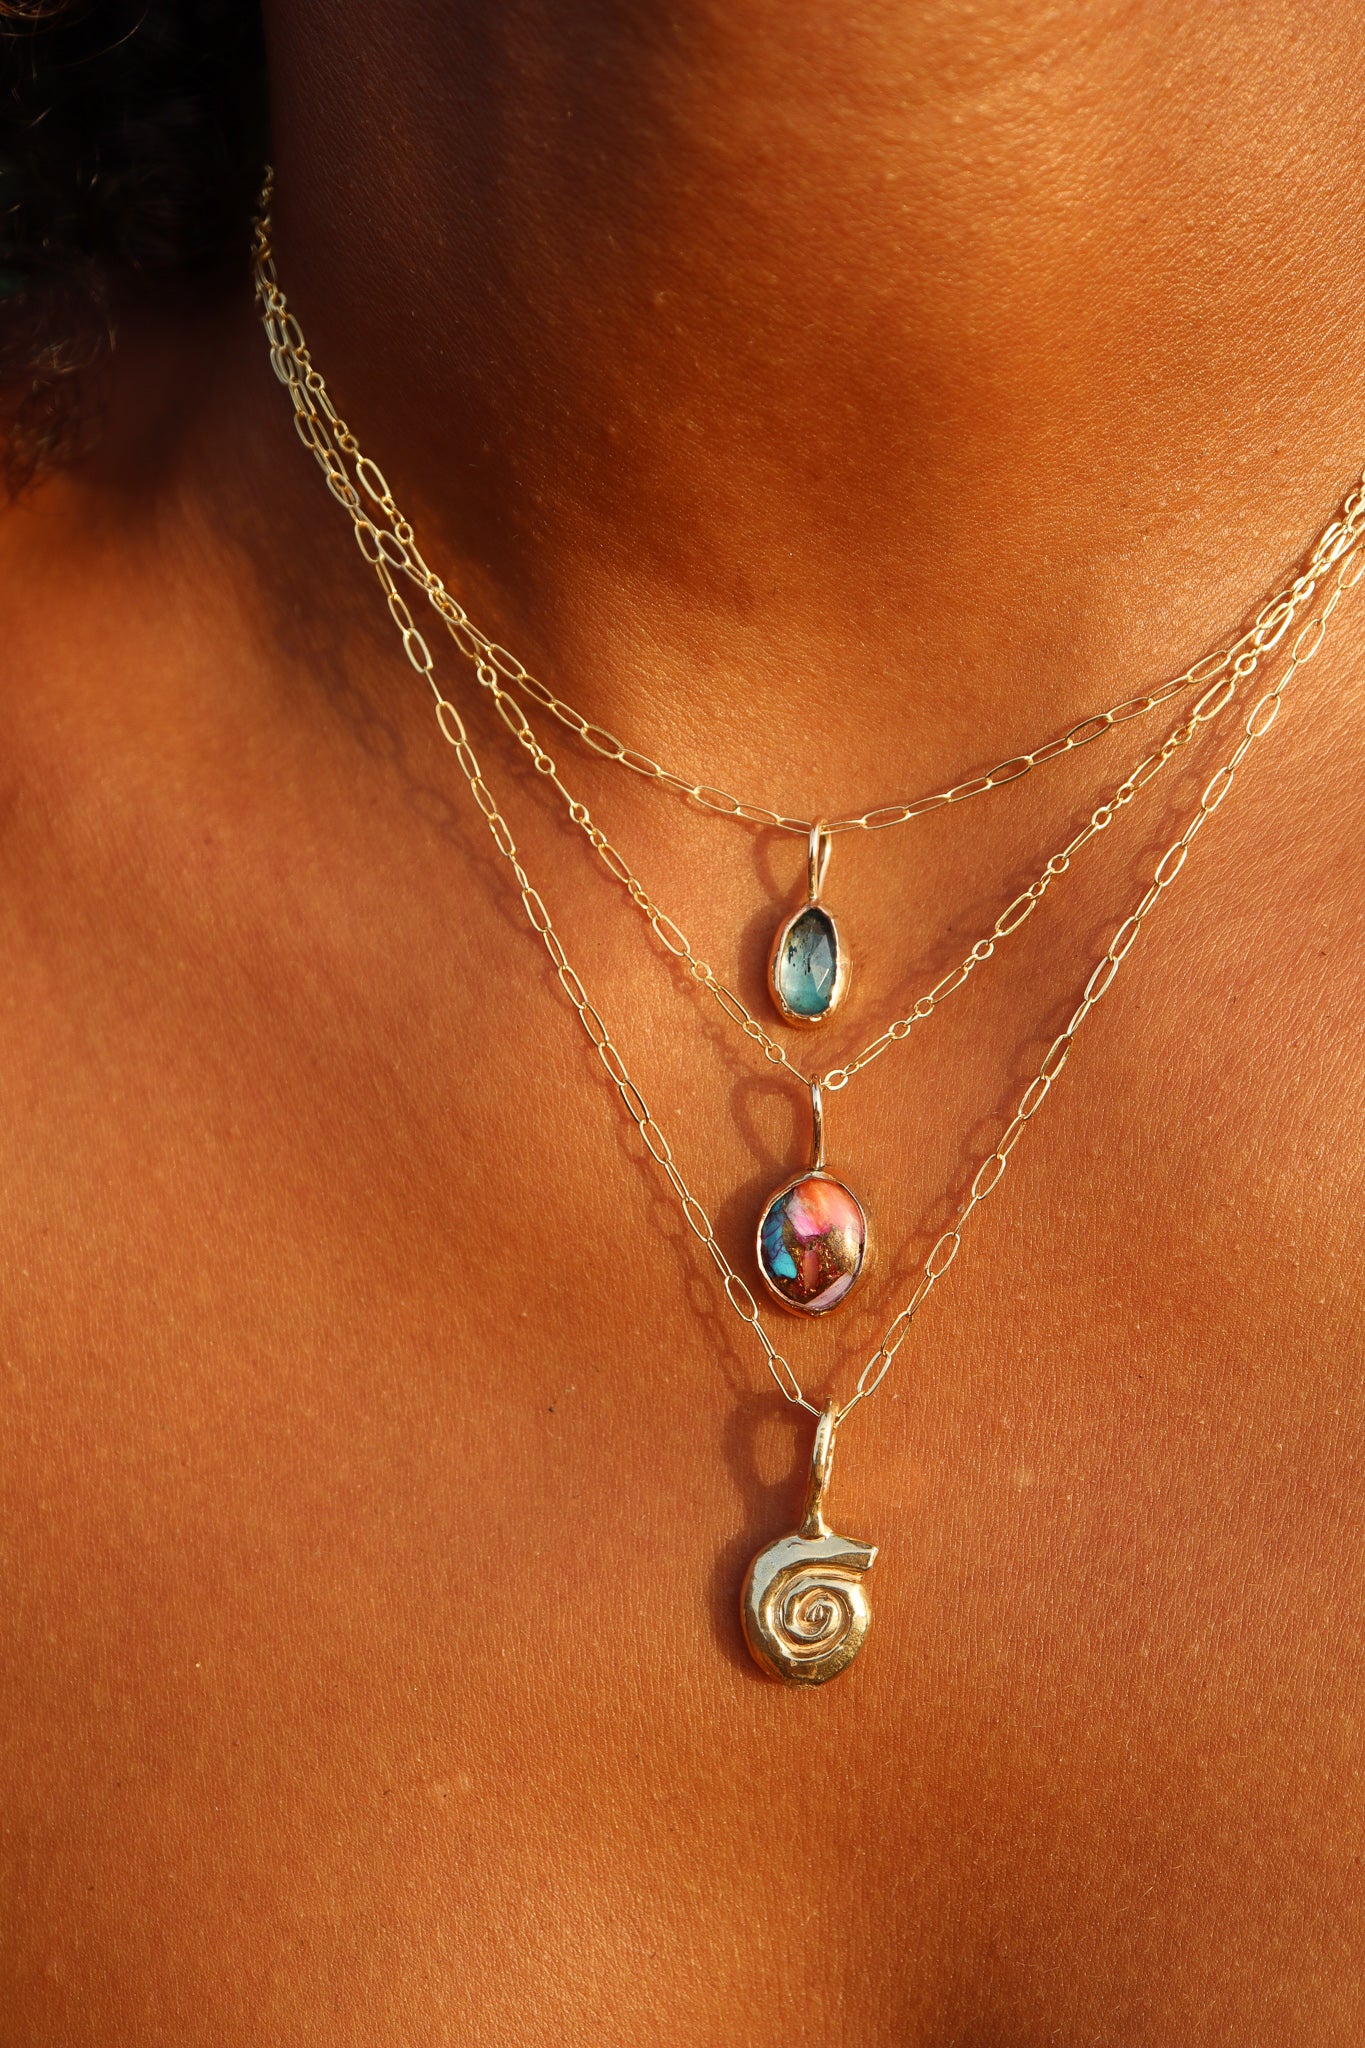 Sea Moss necklace